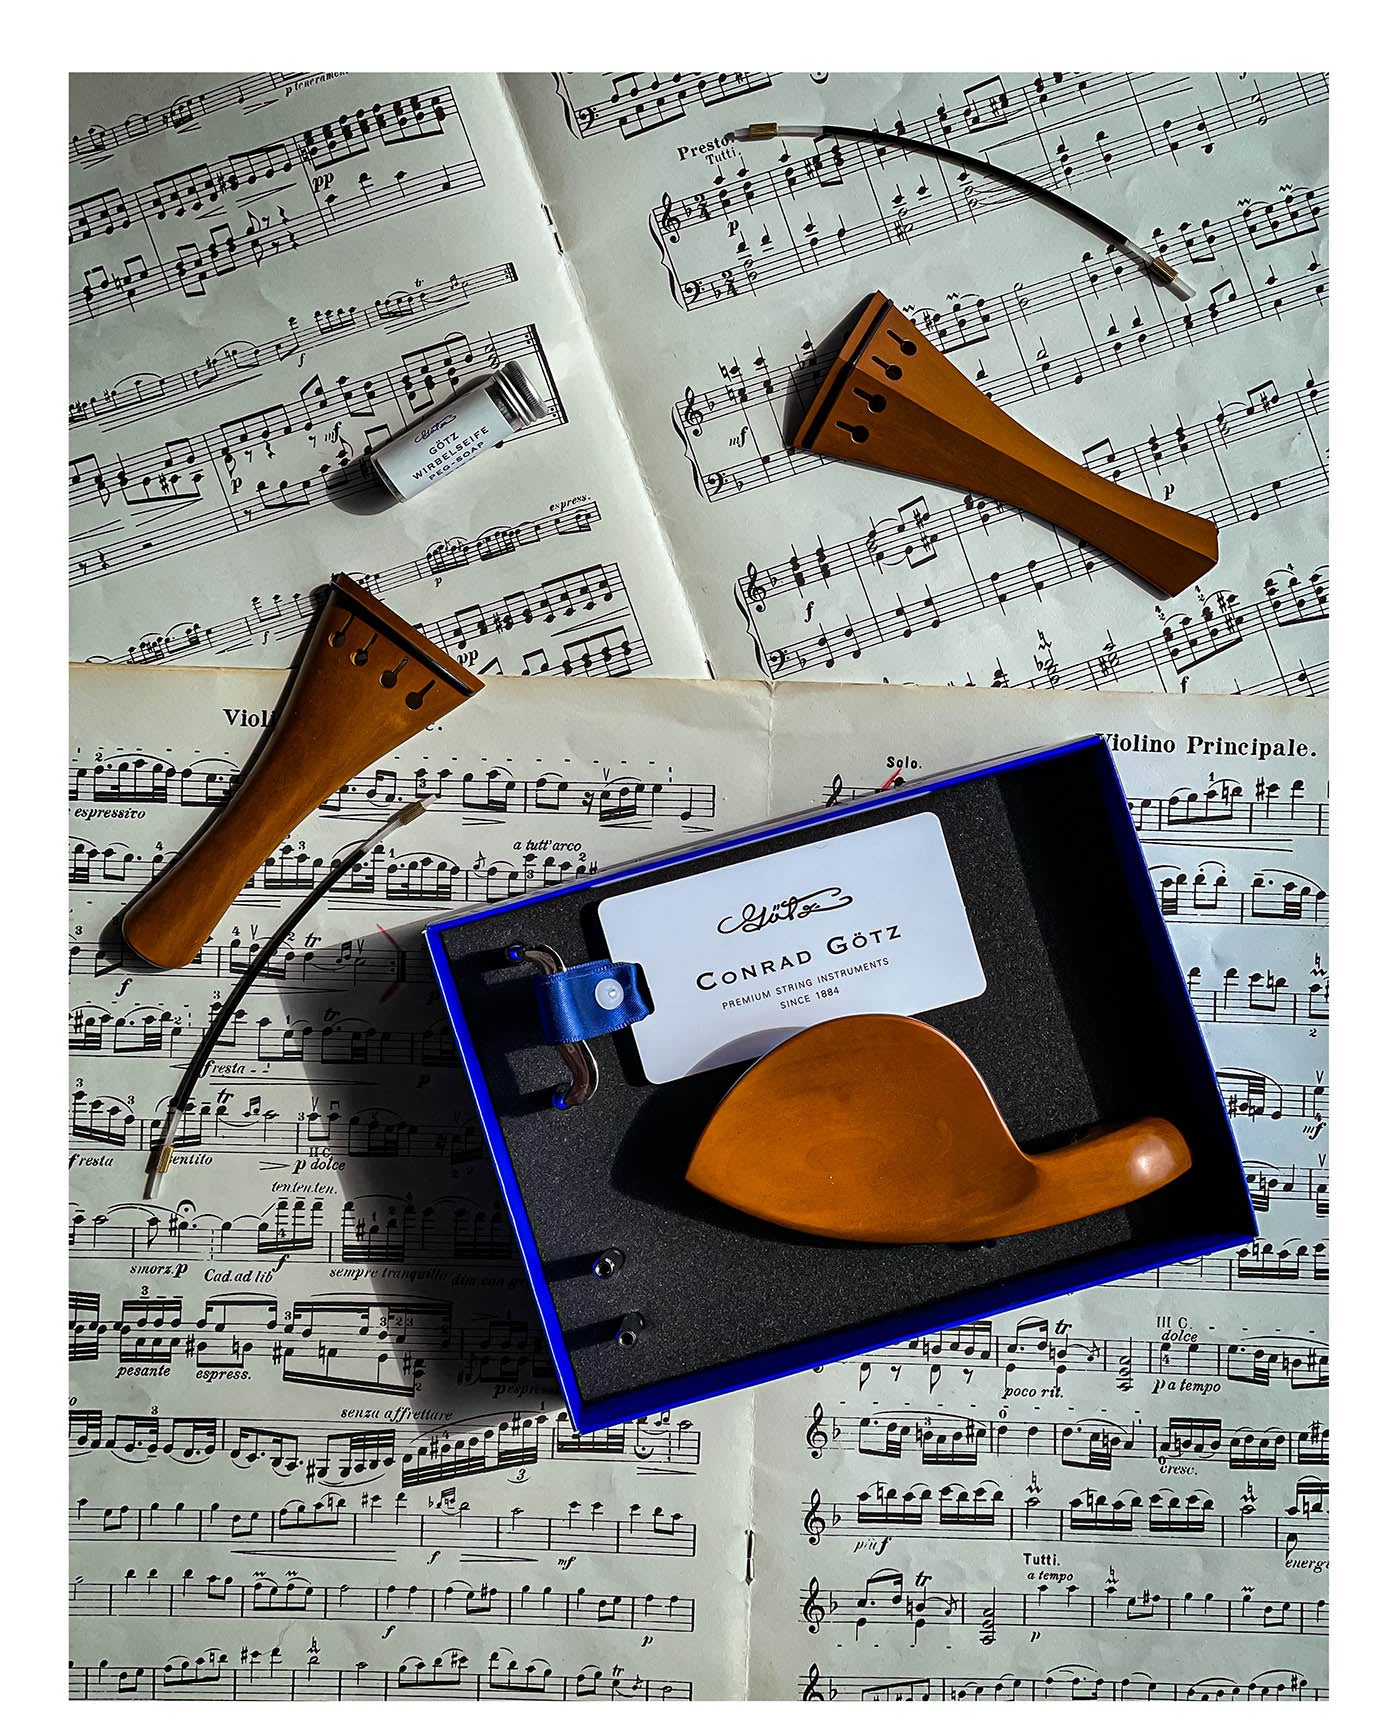 Stradivari Kinnhalter Violine Buchsbaum, ZK-305